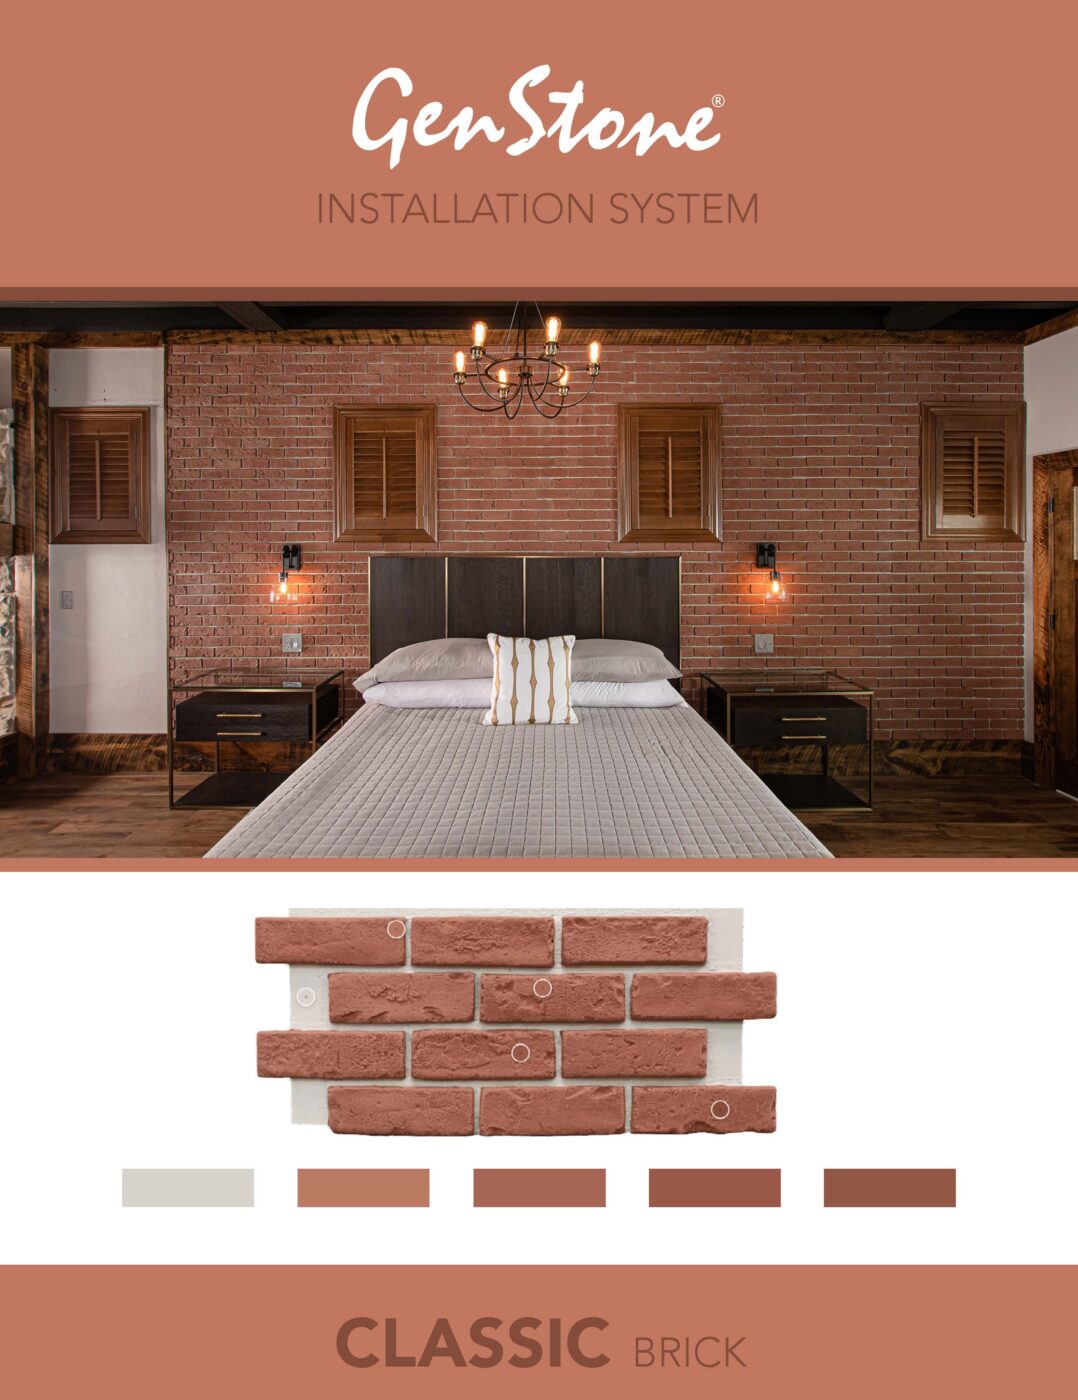 Heritage Brick - Classic - Ecostone Products